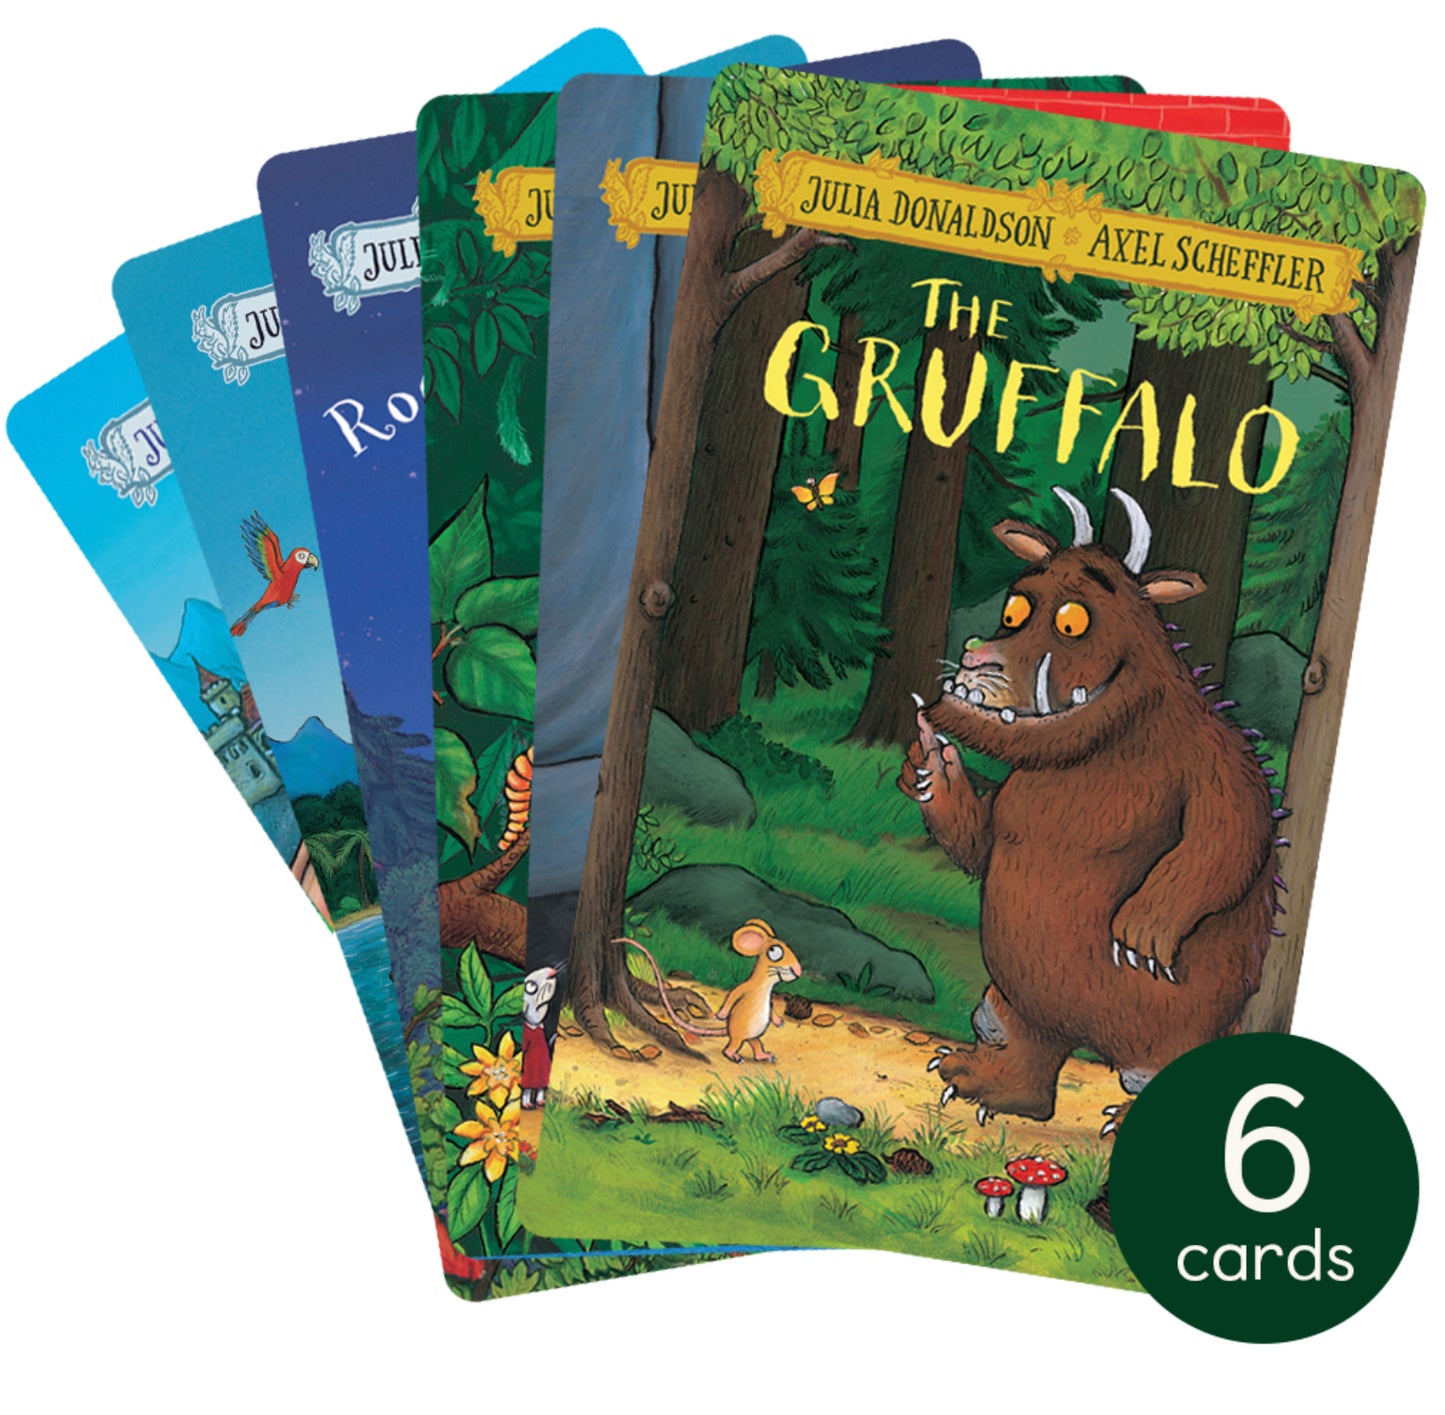 Yoto gruffalo six book bundle - Julia Donaldson collection Christmas gift idea